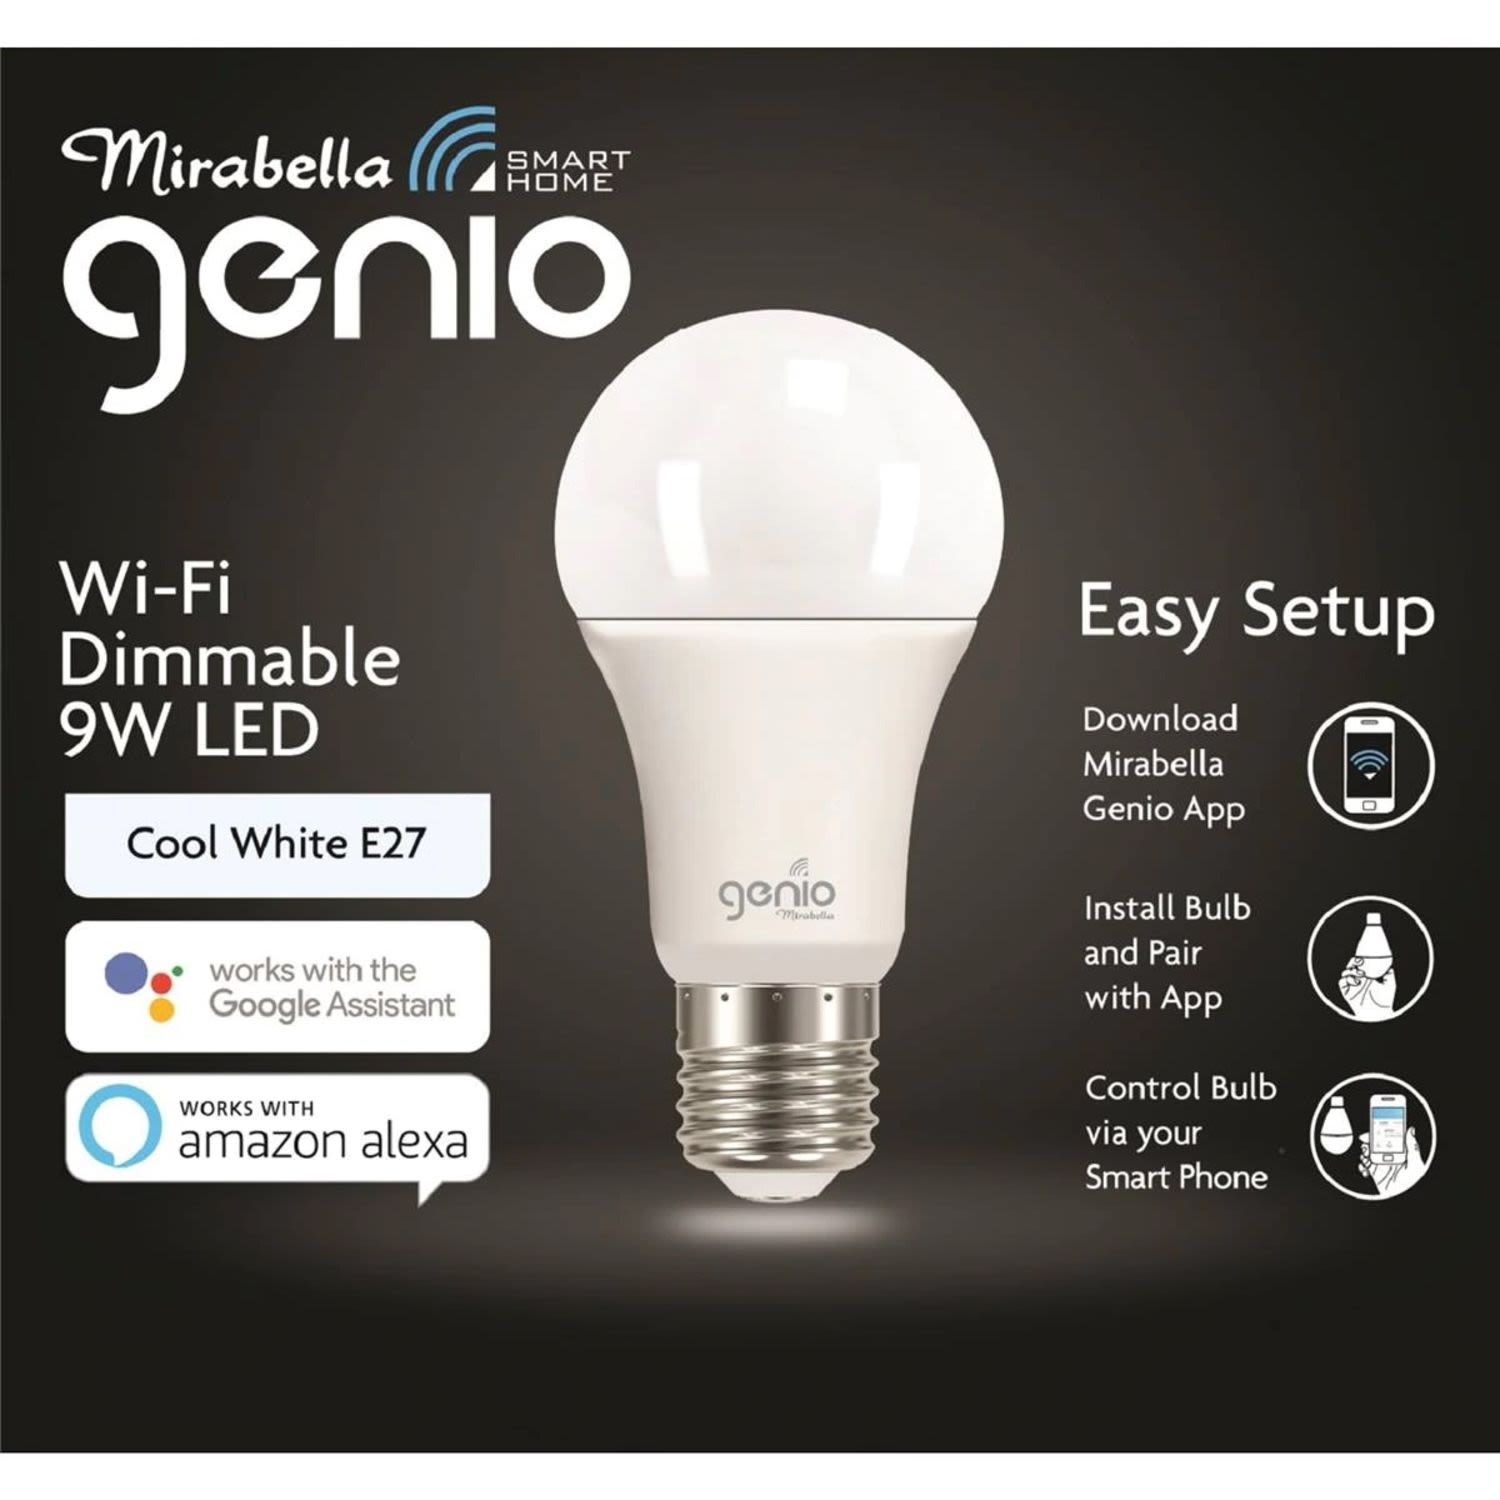 Mirabella Genio Wi-Fi Dimmable 9W Led Light Bulb, 1 Each